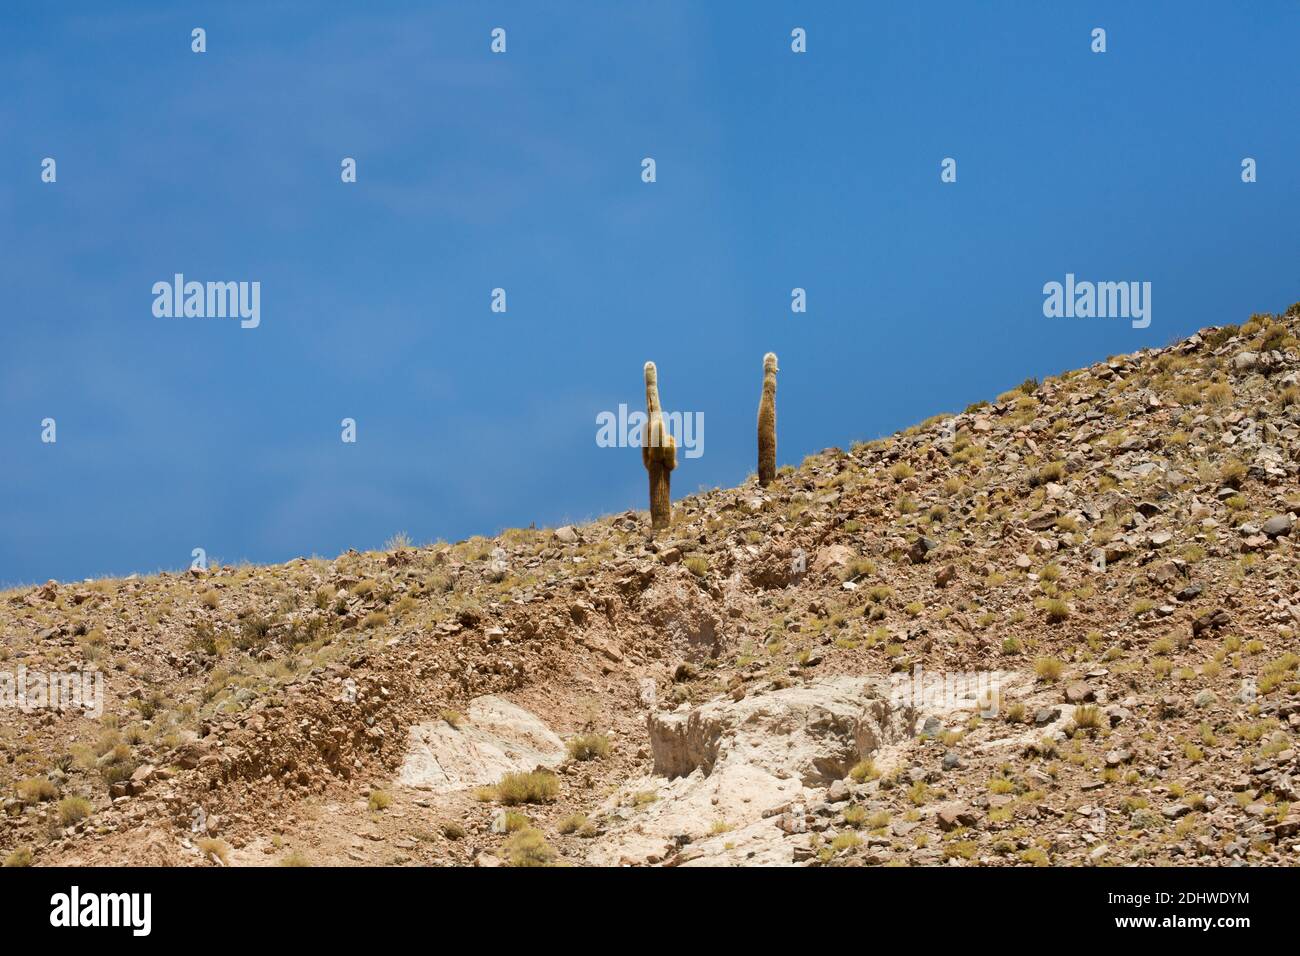 Ancient cardon cactus (echinopsis atacamensis) growing at high altitude above Socaire, Atacama desert, Chile Stock Photo